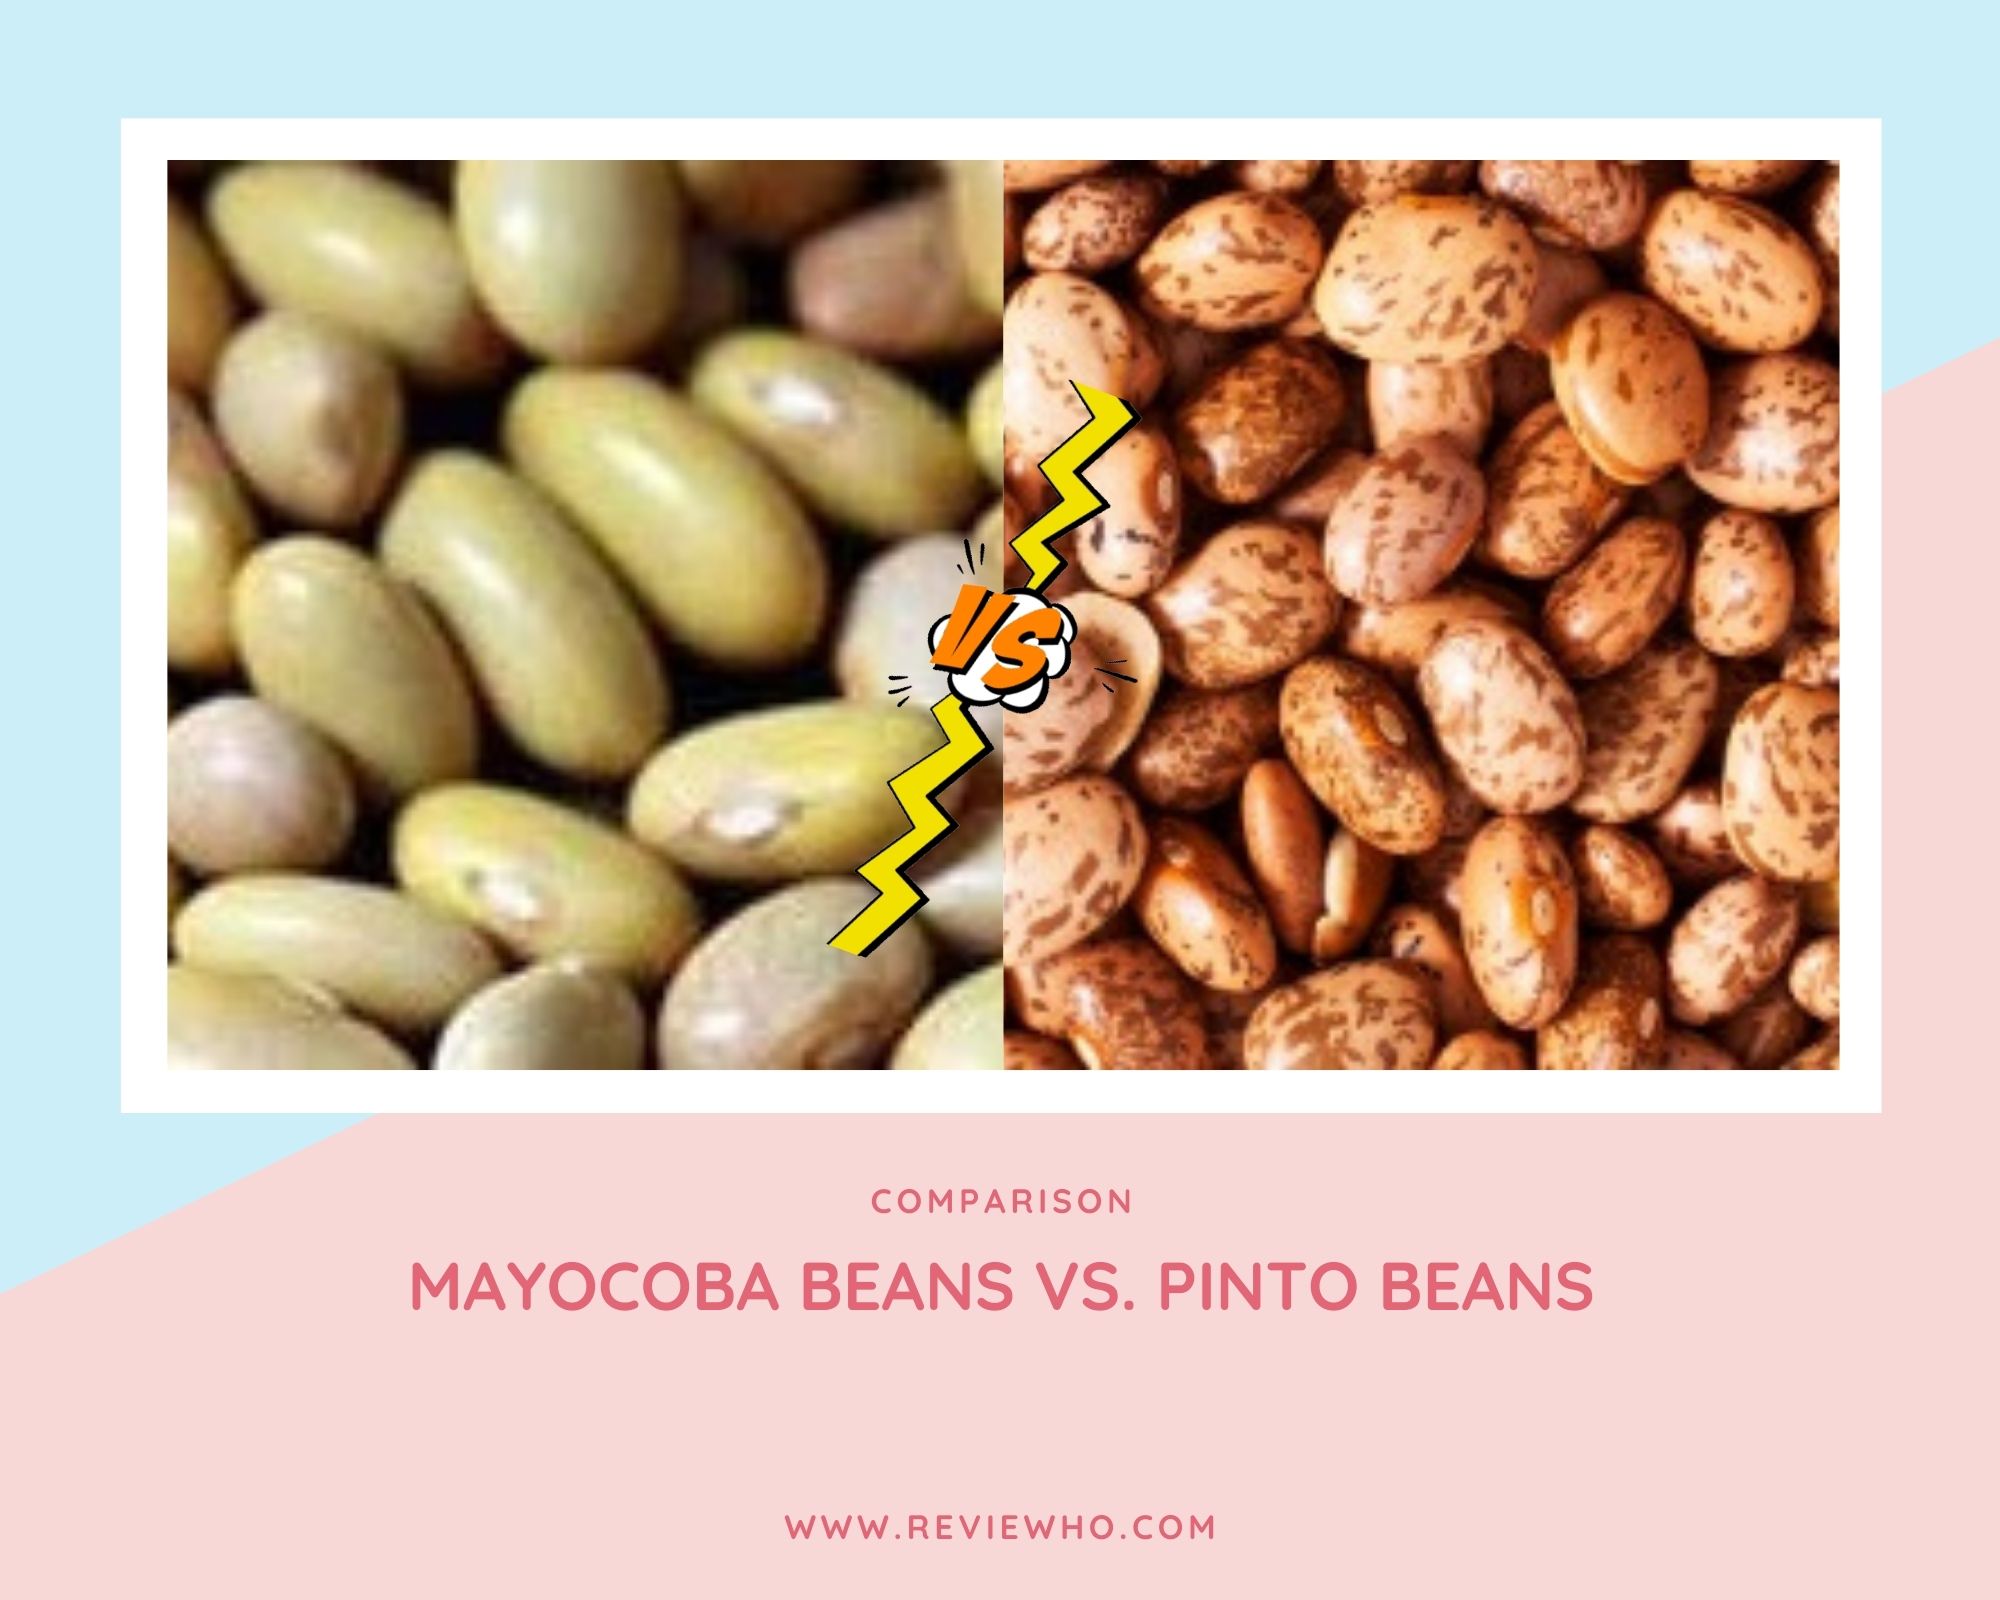 Mayocoba Beans or Pinto Beans